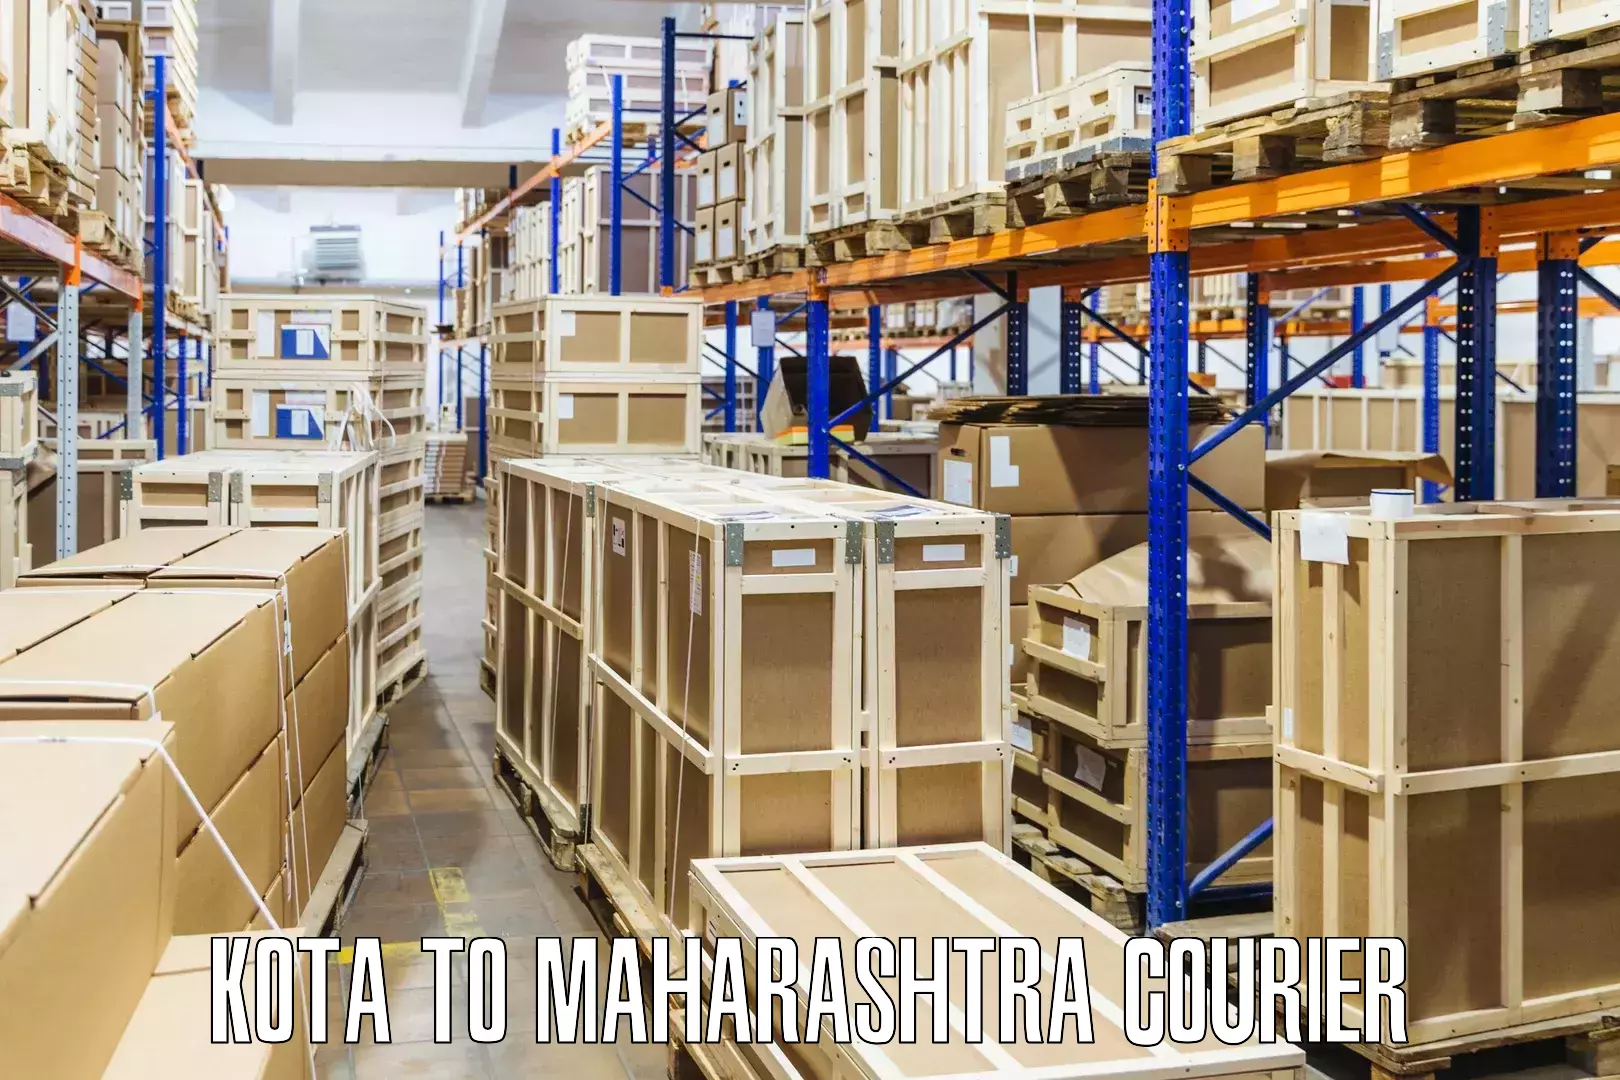 24/7 courier service Kota to Maharashtra